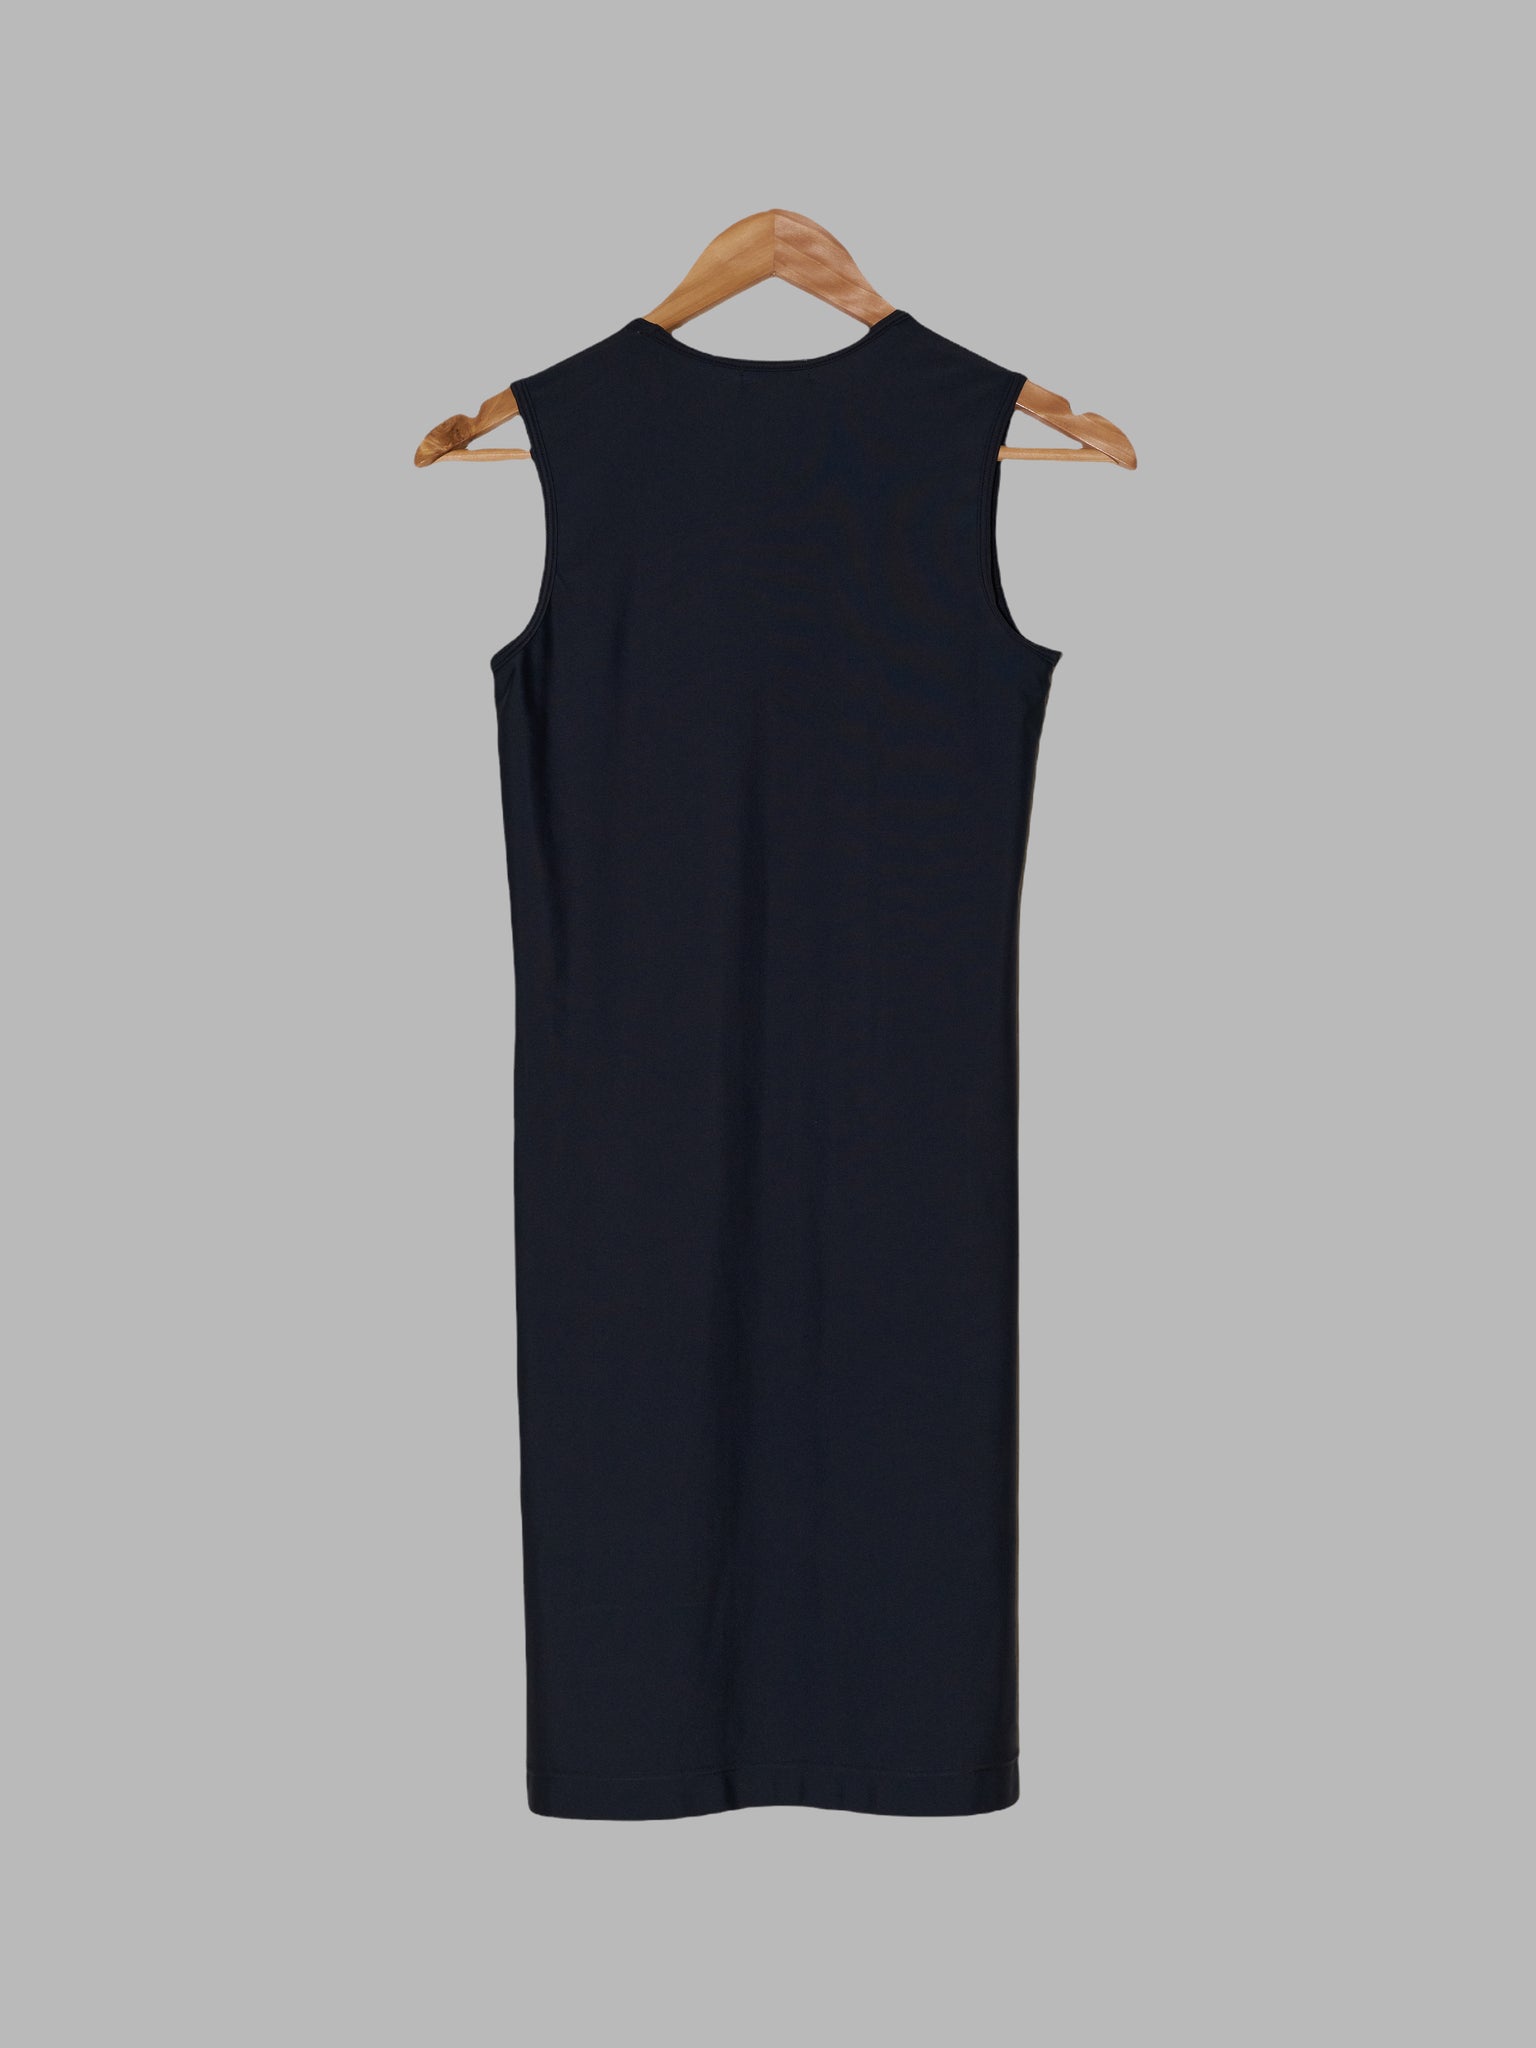 Comme des Garcons AW1997 petrol-y blue nylon sleeveless tunic or mini dress